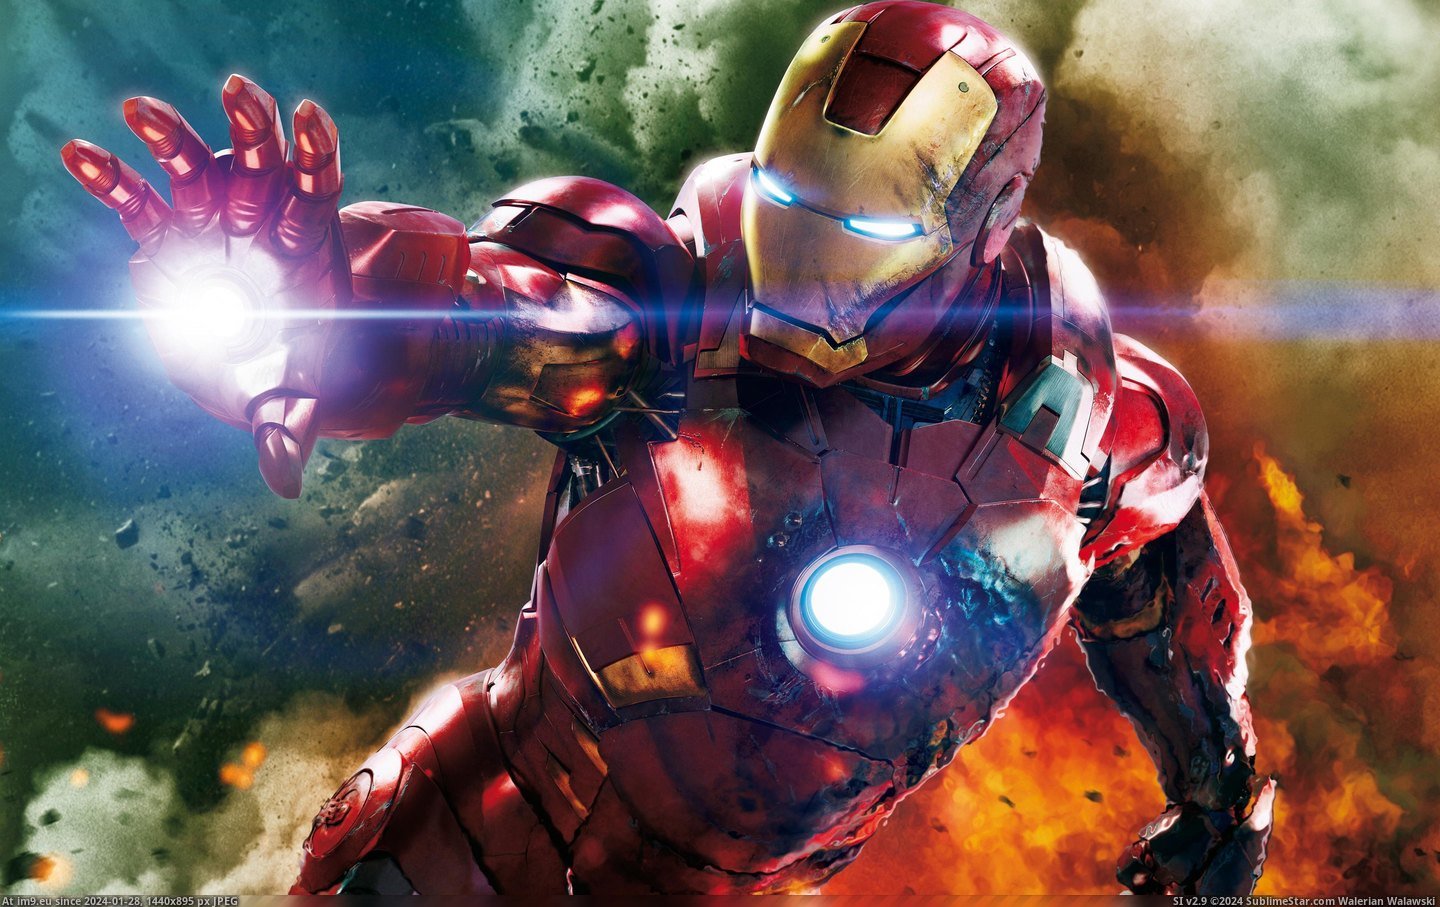 #Wallpaper #Man #Avengers #Wide #Iron The Avengers Iron Man Wide HD Wallpaper Pic. (Изображение из альбом Unique HD Wallpapers))